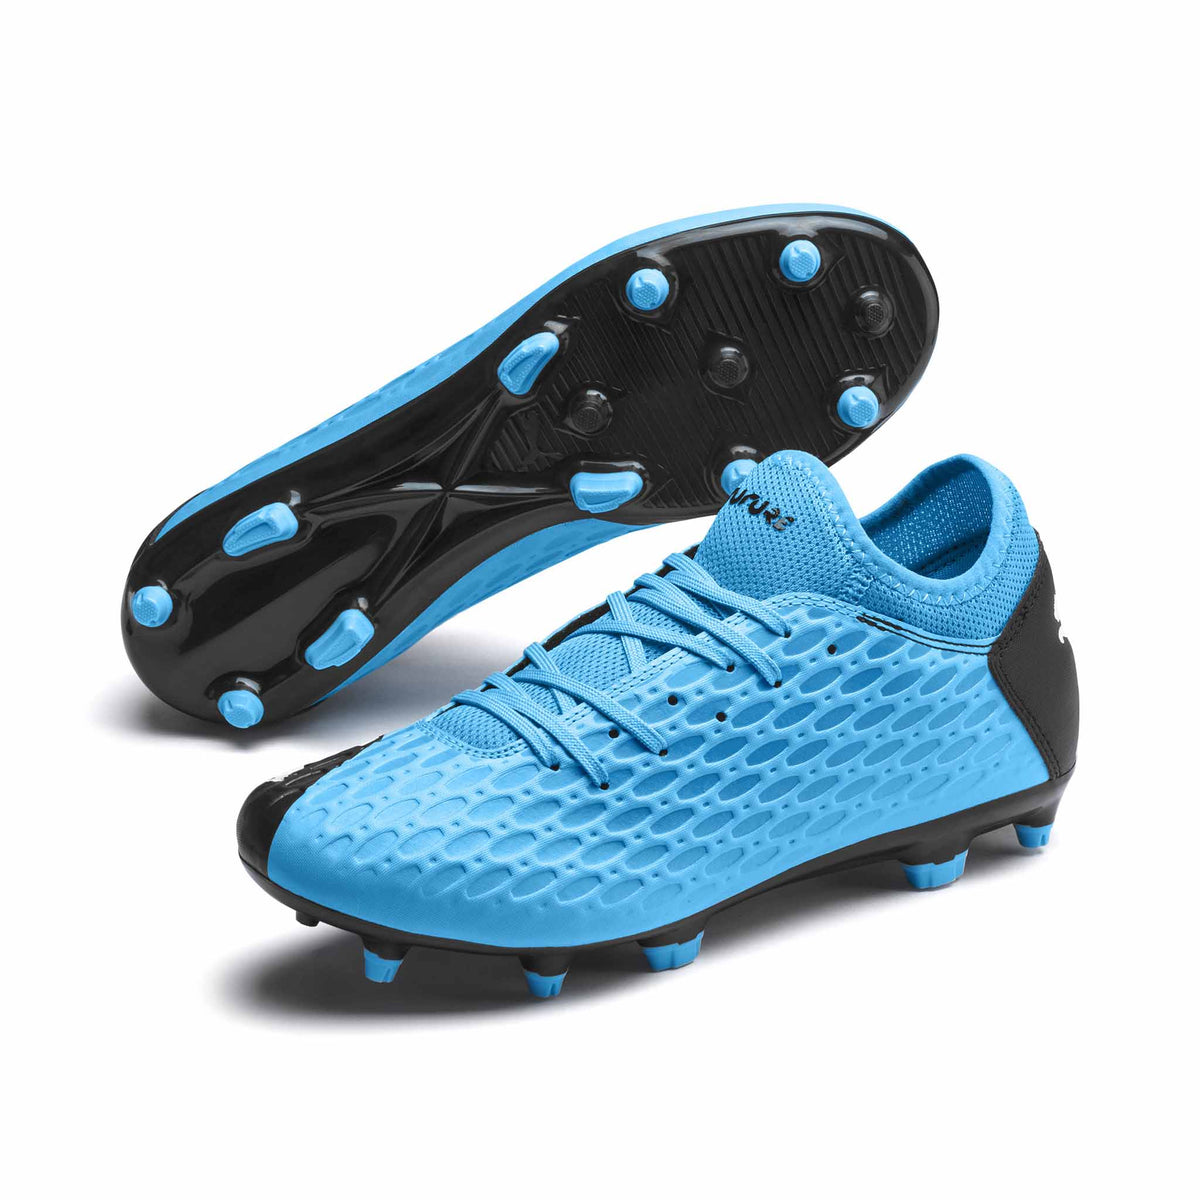 Puma Future 5.4 Netfit FG/AG chaussures de soccer a crampons - Bleu / Noir